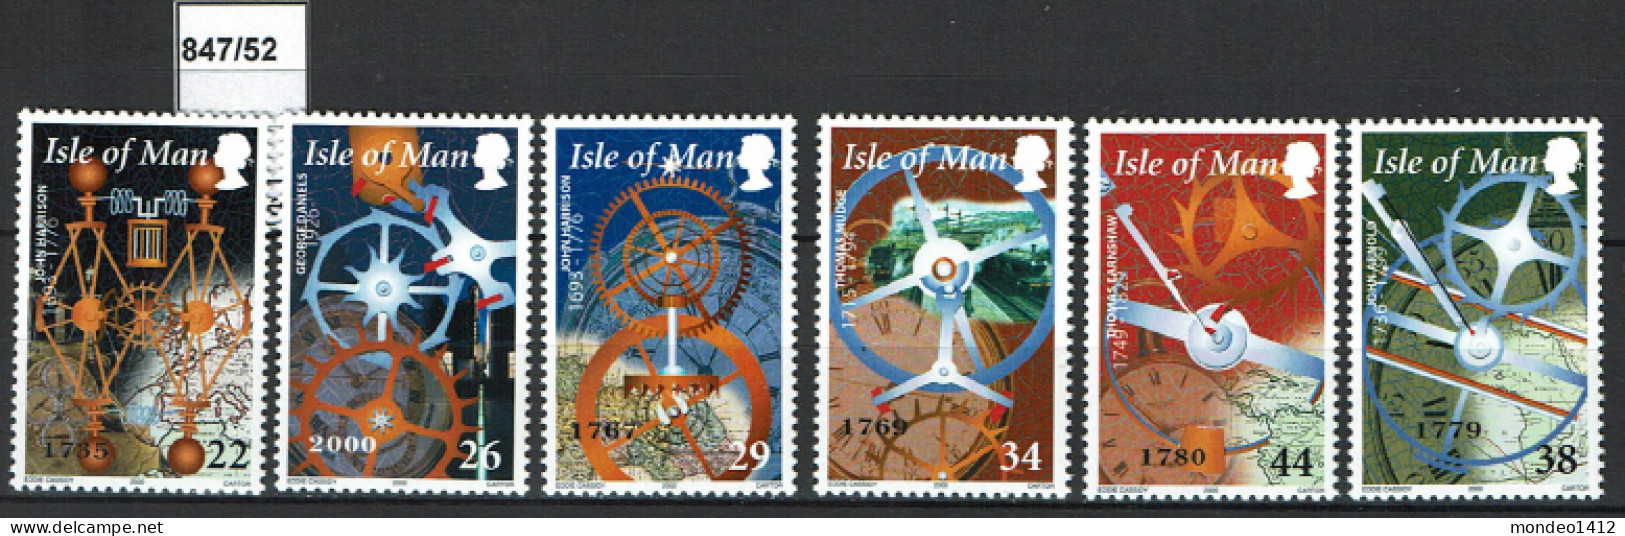 Isle Of Man - 2000 - MNH - Clocks, Horloges, Uurwerken - Detail Mechanisme - Man (Ile De)